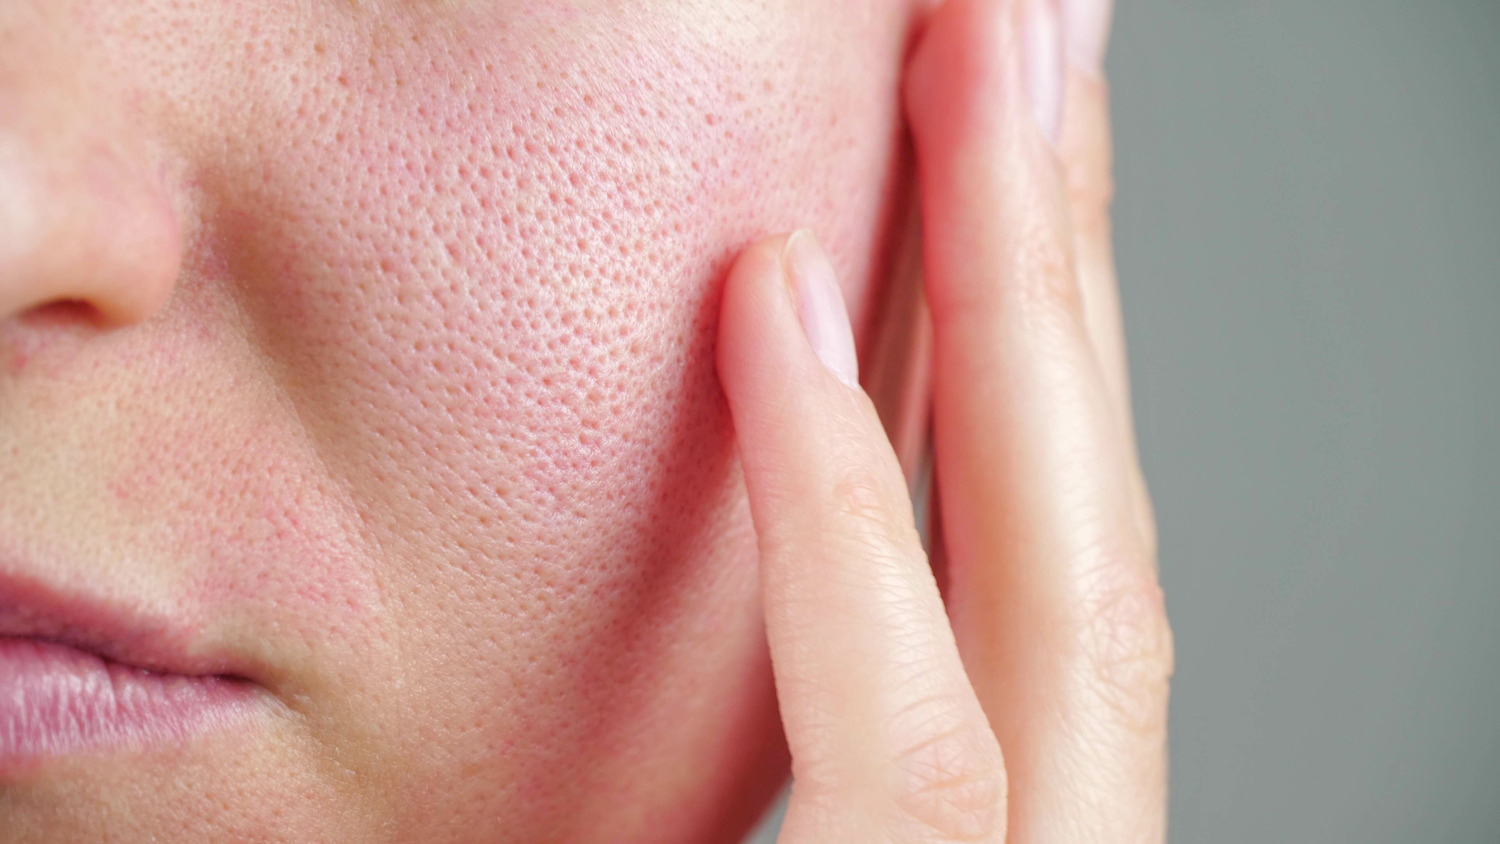 Enlarged Pores vs. Acne Scars